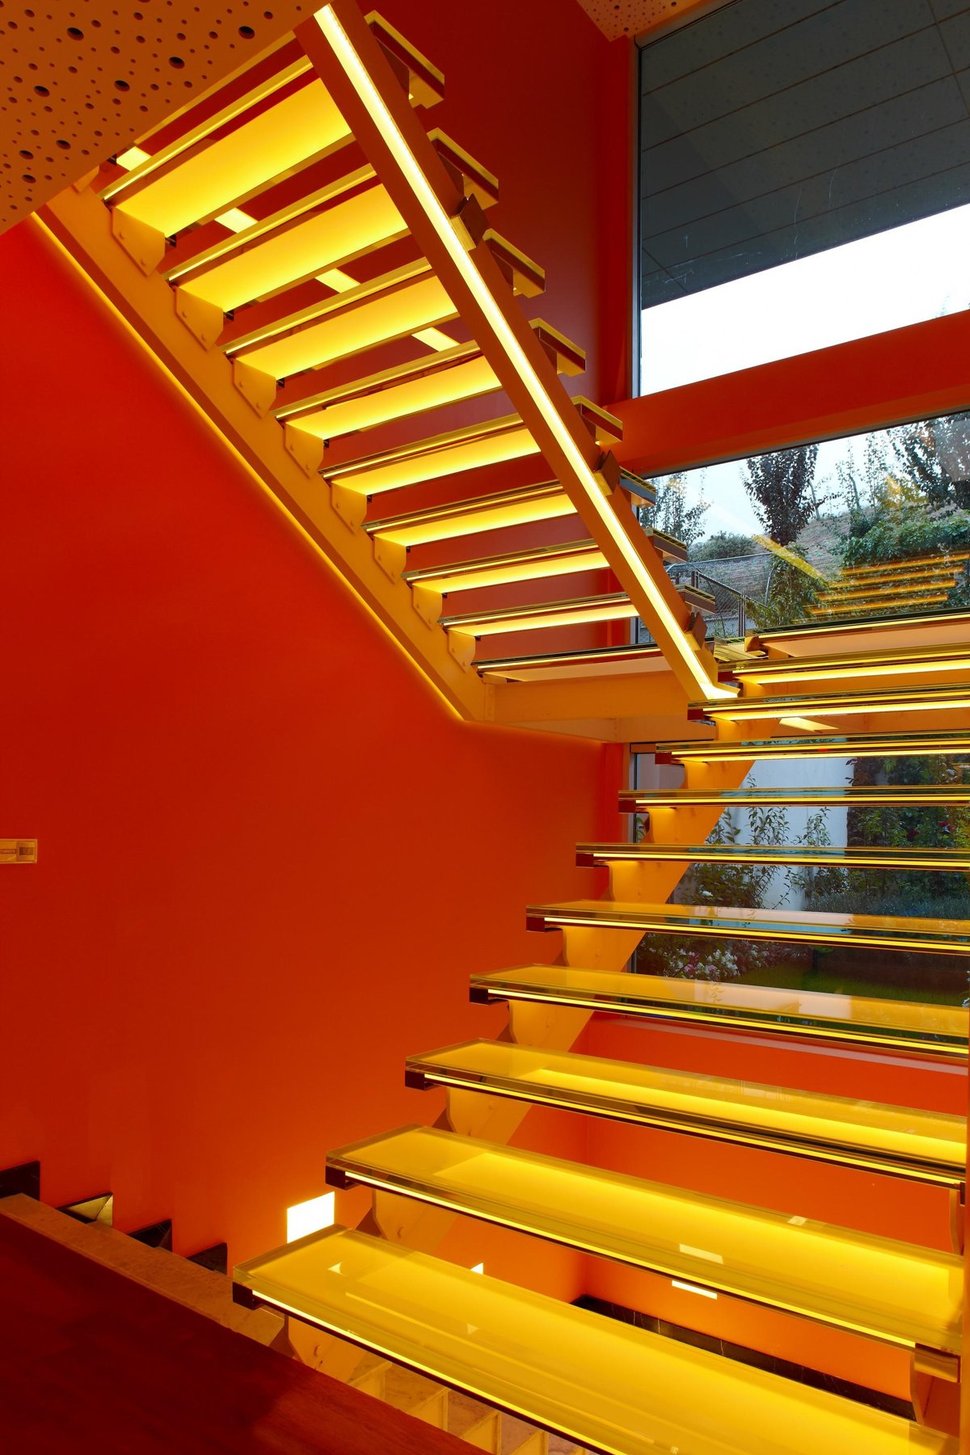 ultramodern-house-with-vibrant-lighting-design-focus-11-stairs-orange.jpg